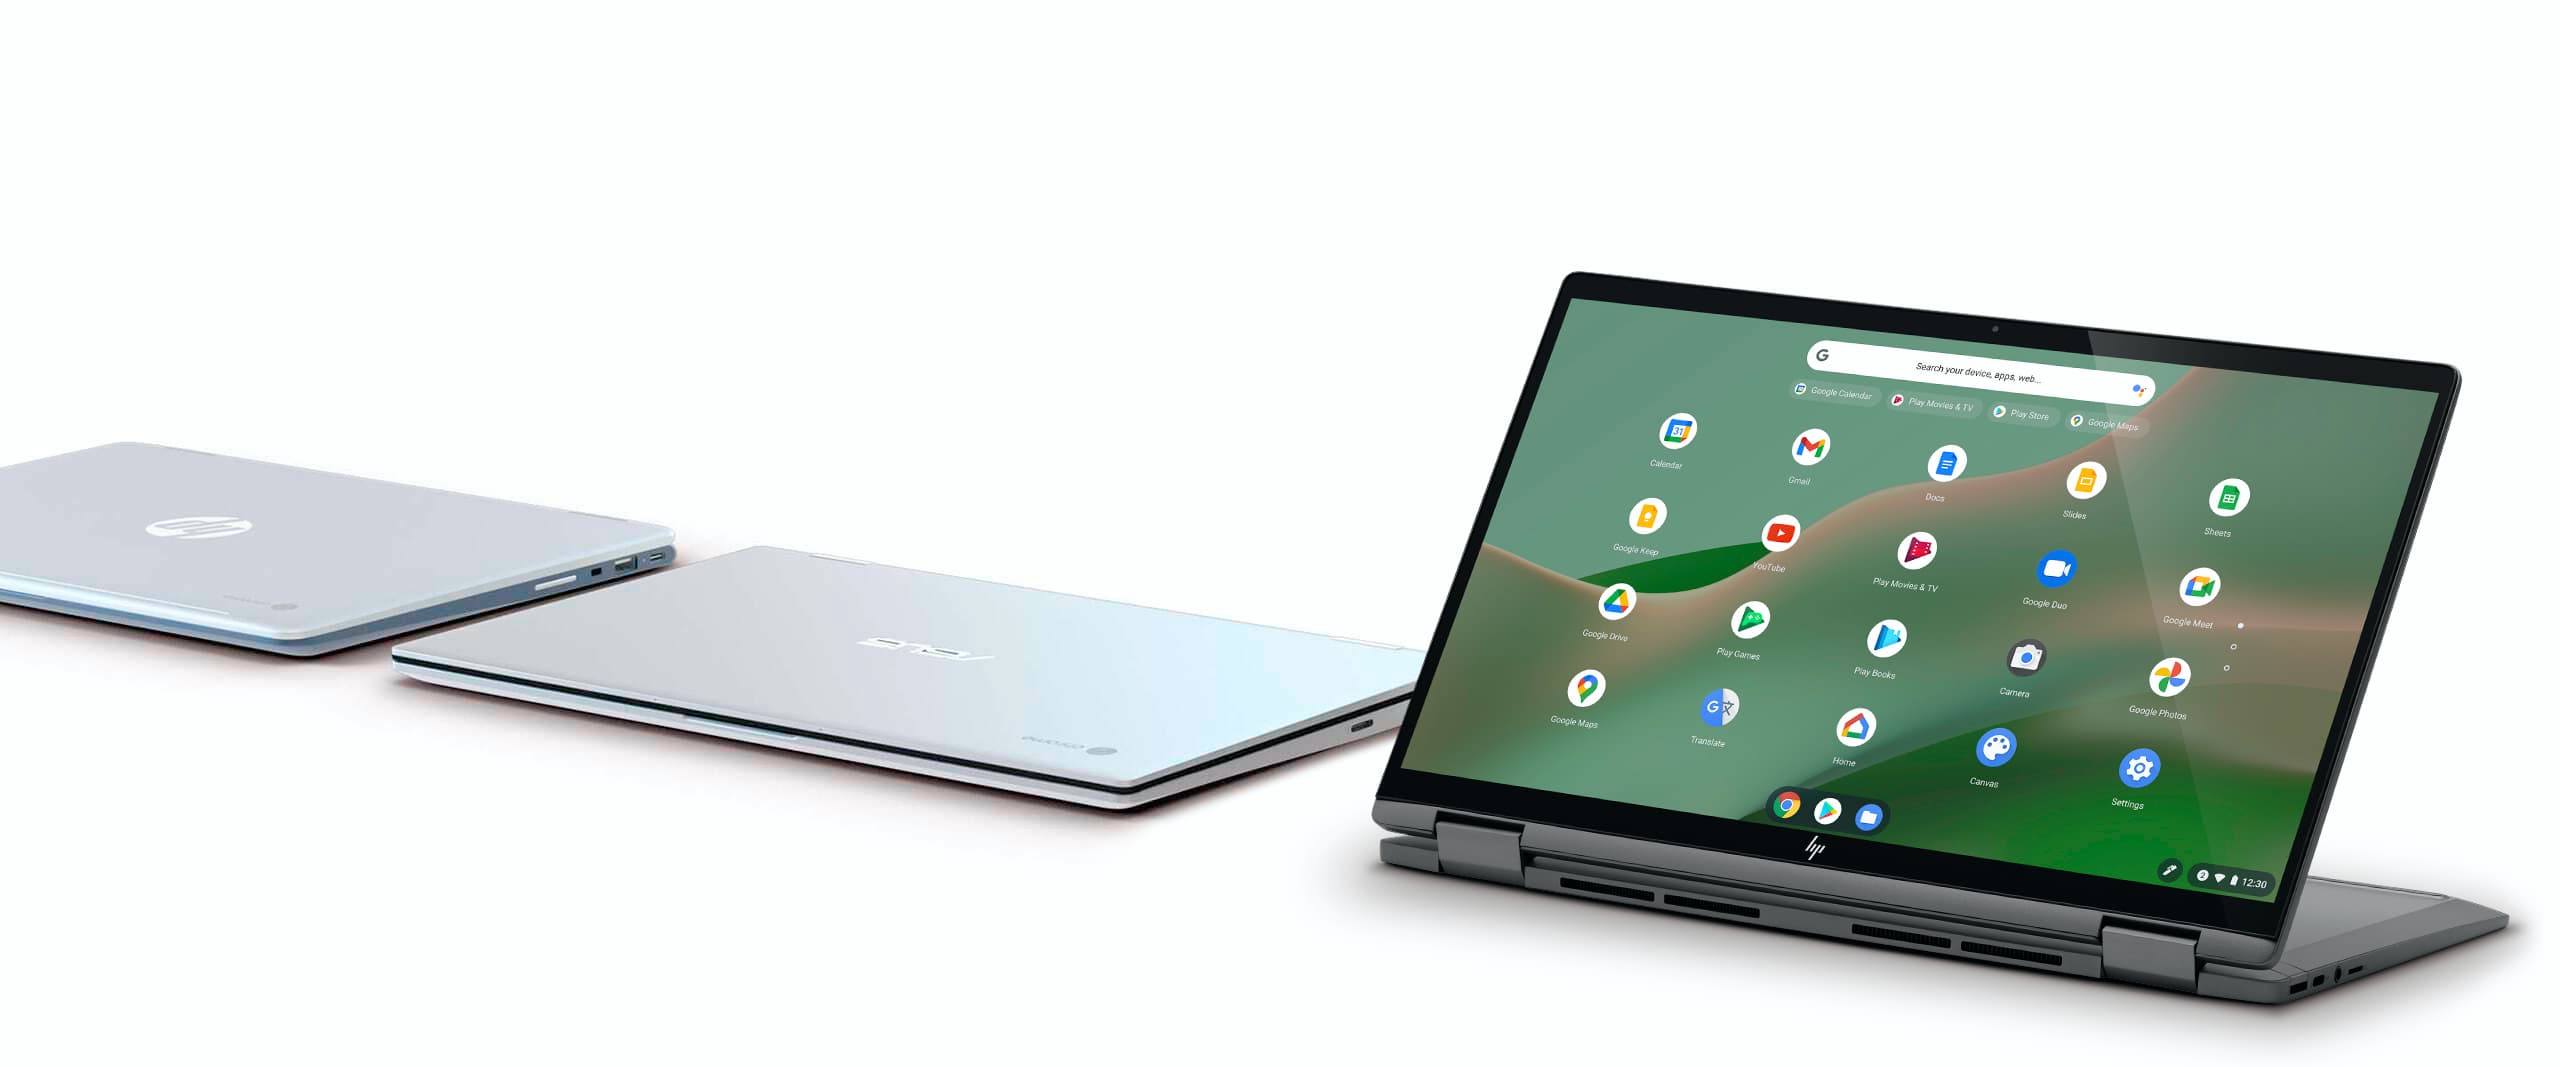 Google Chromebooks - Laptops, desmontables y tablets